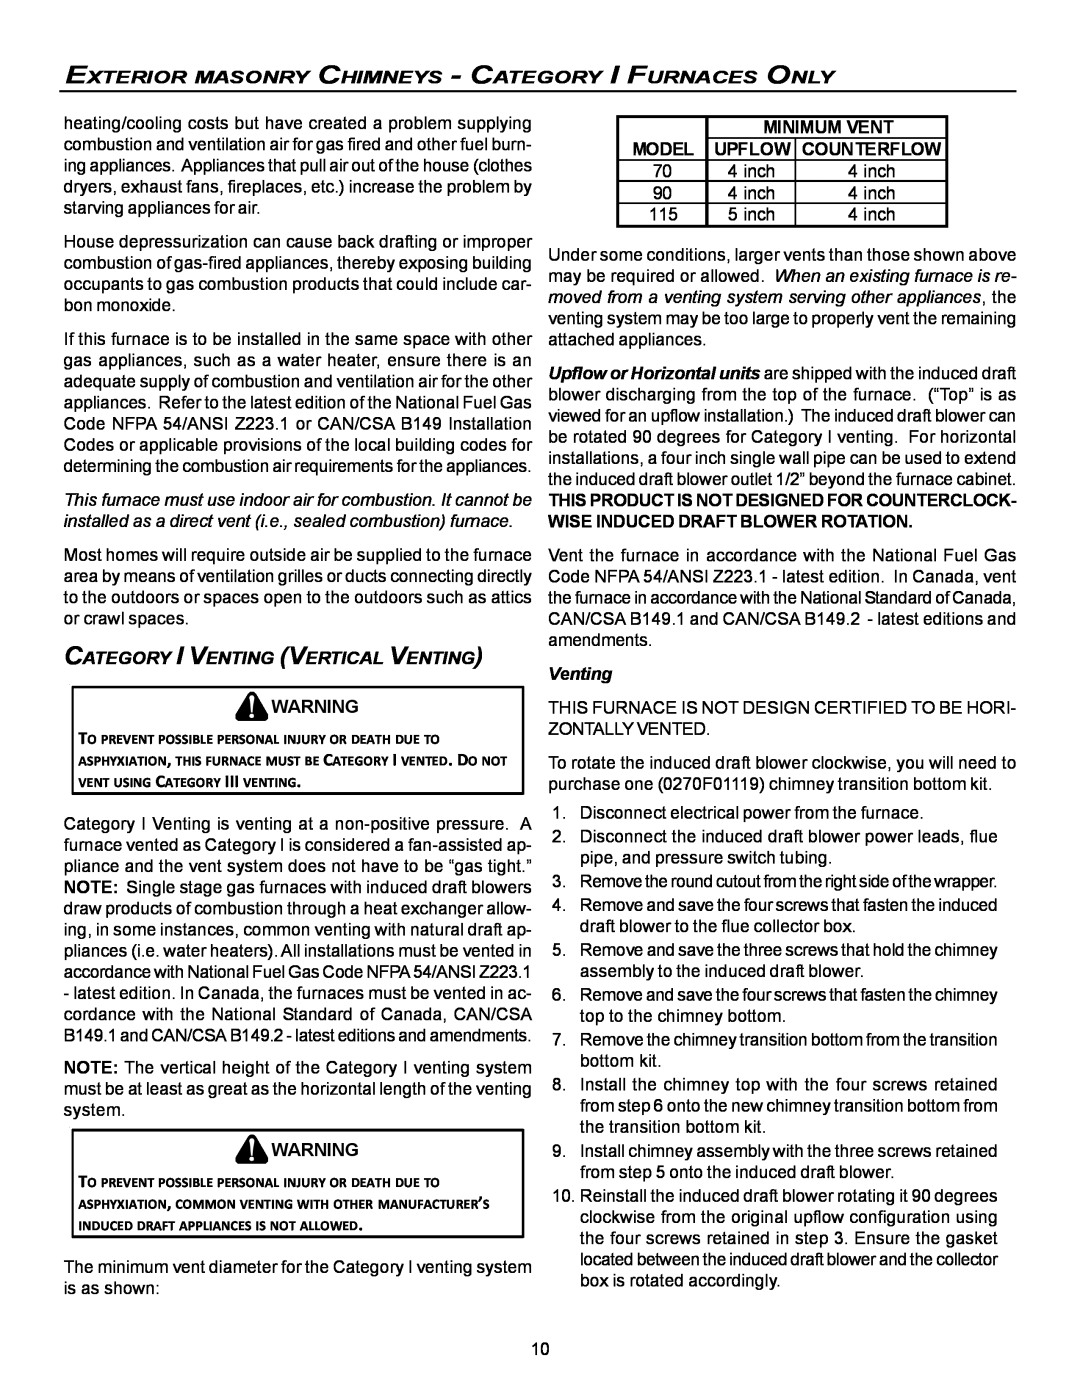 Goodman Mfg VC8 instruction manual Minimum Vent, Category I Venting Vertical Venting, Model, Upflow, Counterflow 